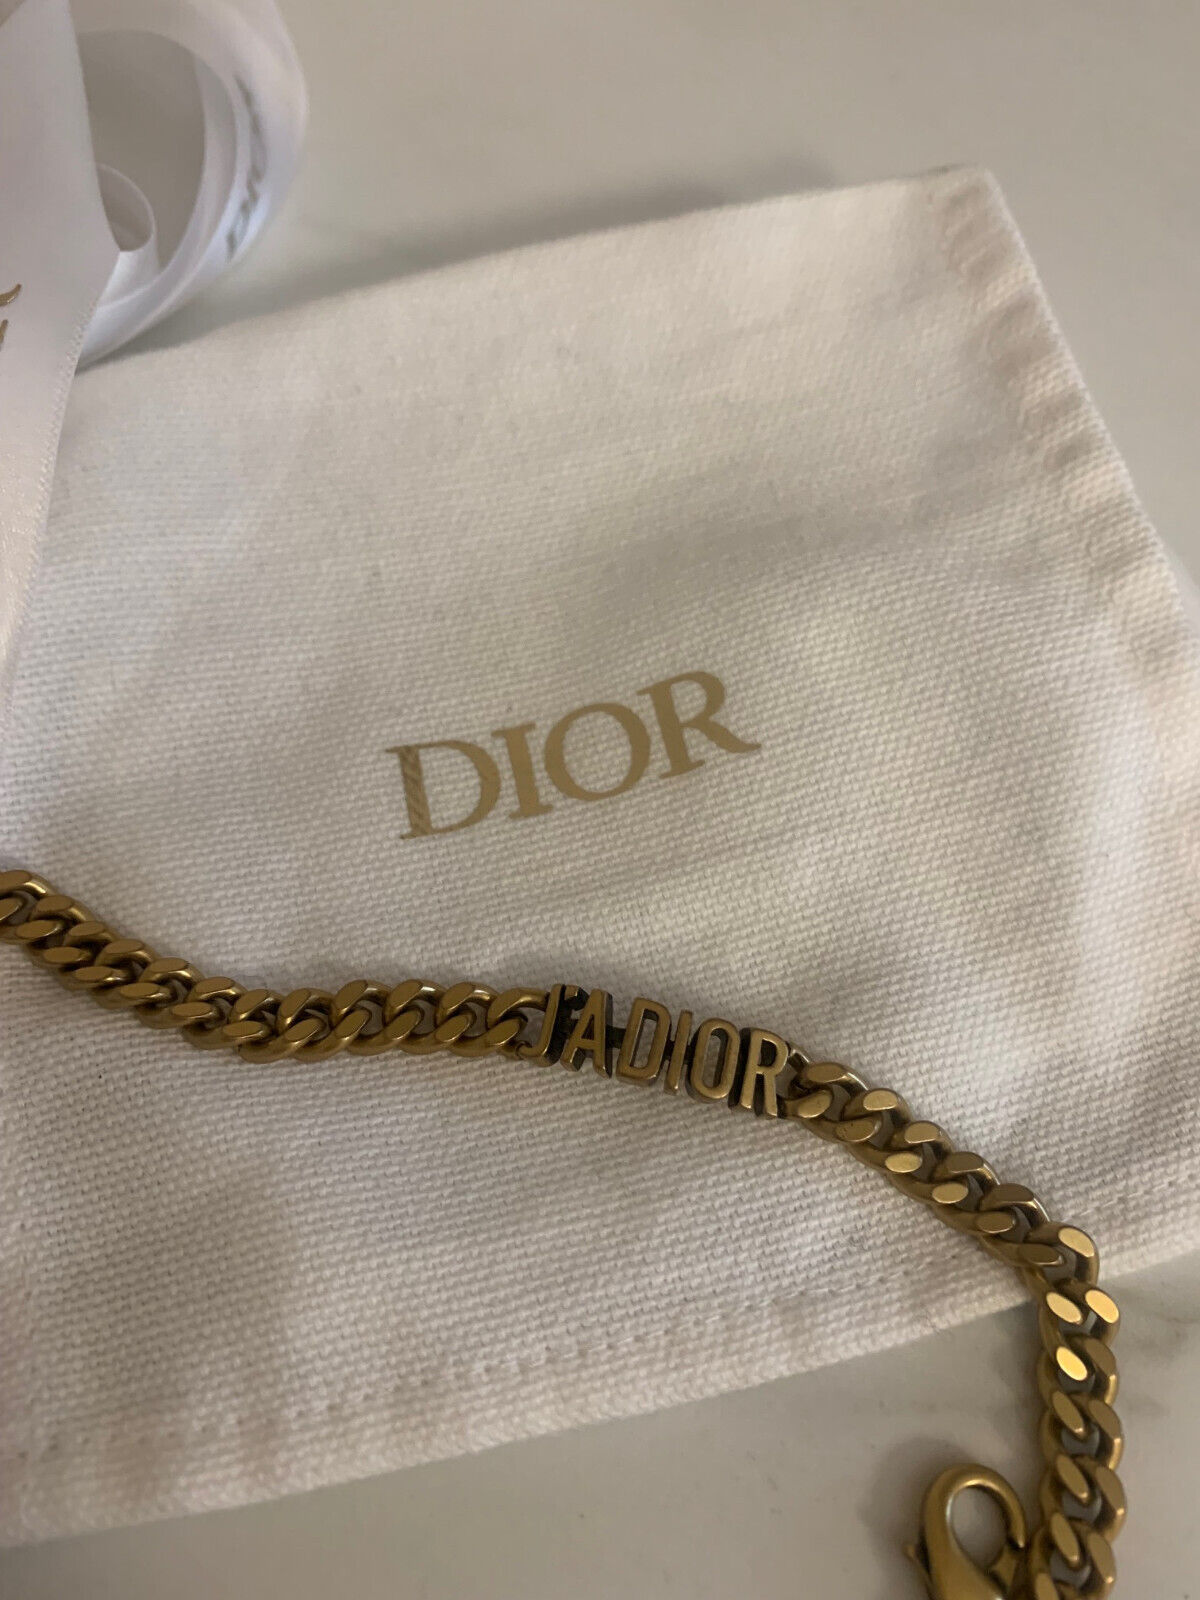 Christian Dior Chain Link Bracelet in Brass gold colour finish "J'ADIOR" - $475.20